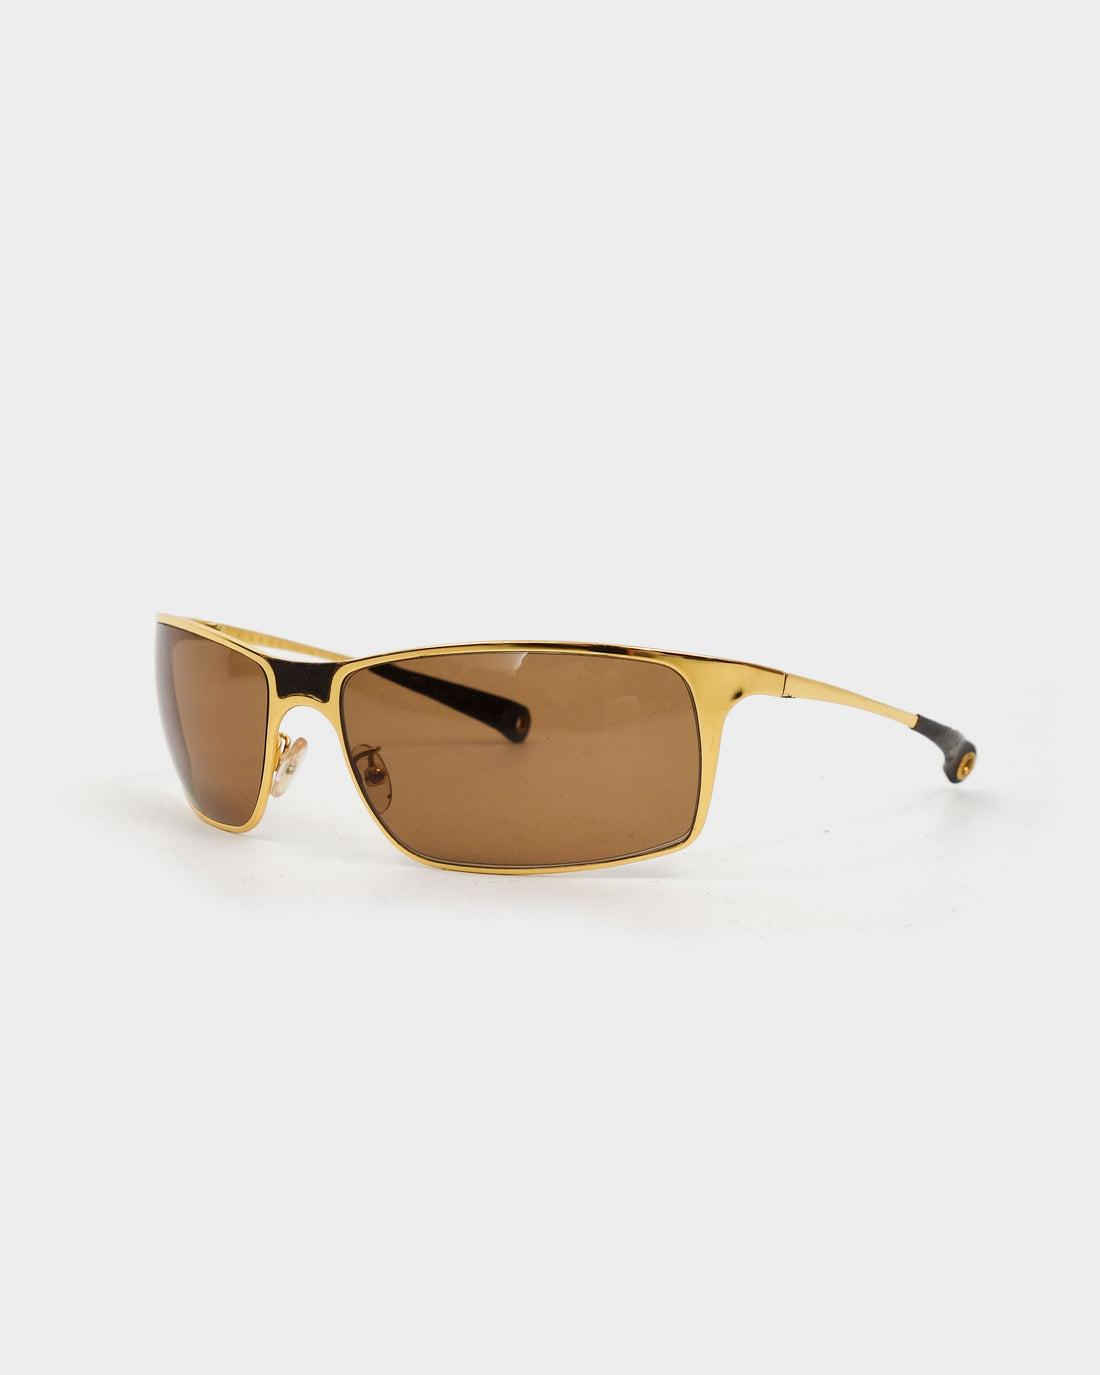 Marni Leather Details Golden Sunglasses 2000's